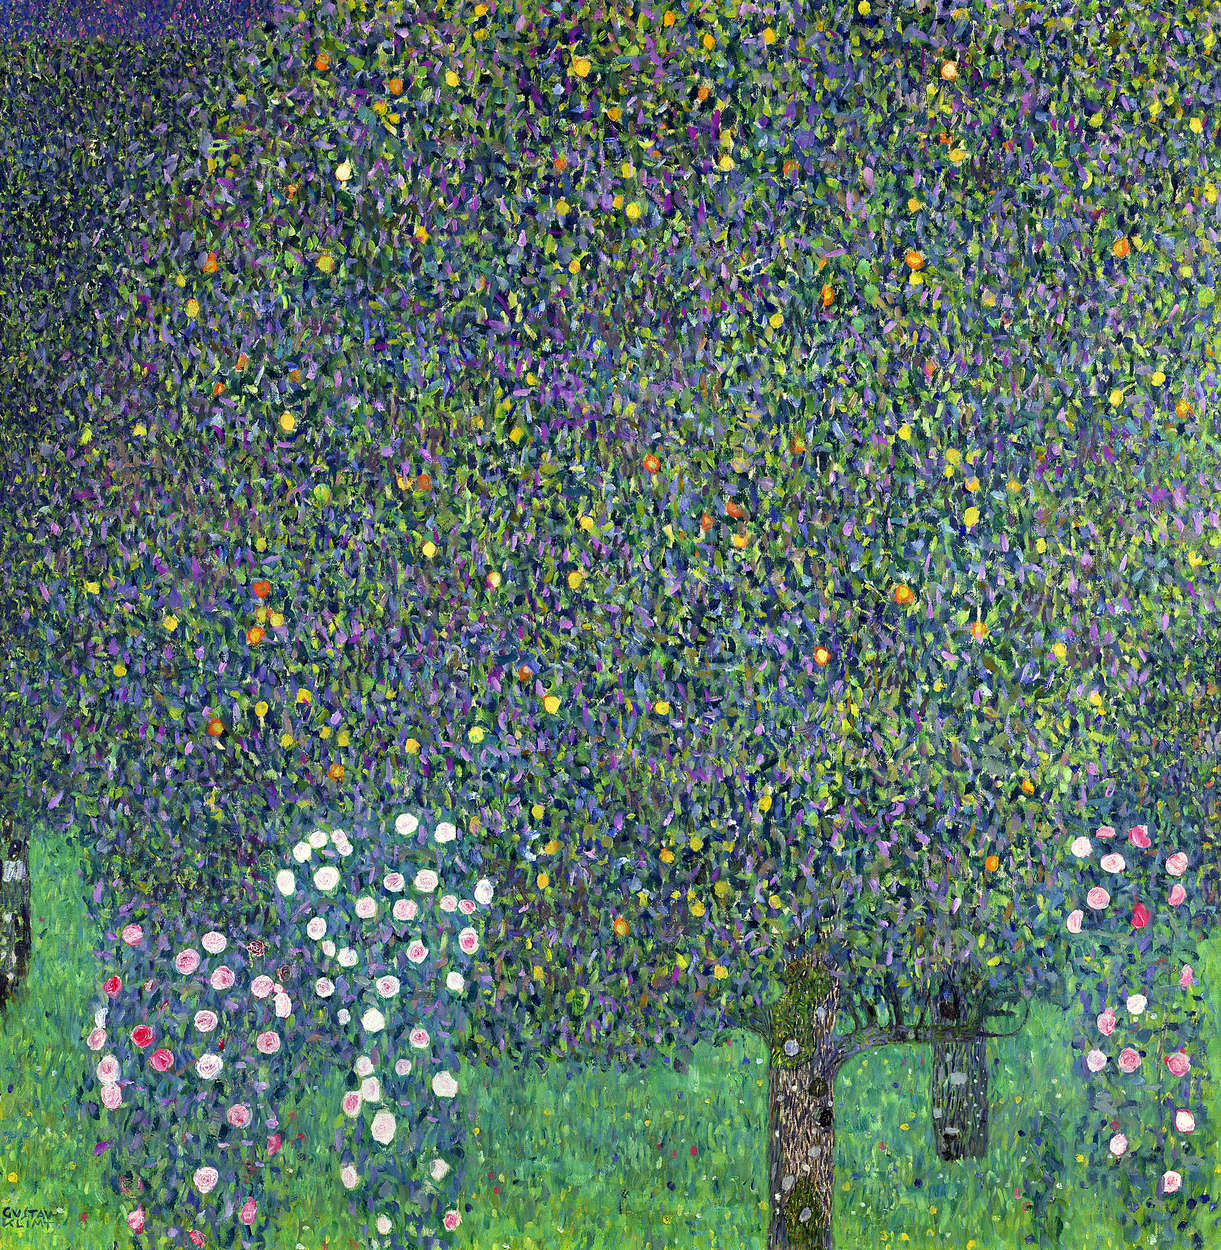             Photo wallpaper "Roses under the trees around" by Gustav Klimt
        